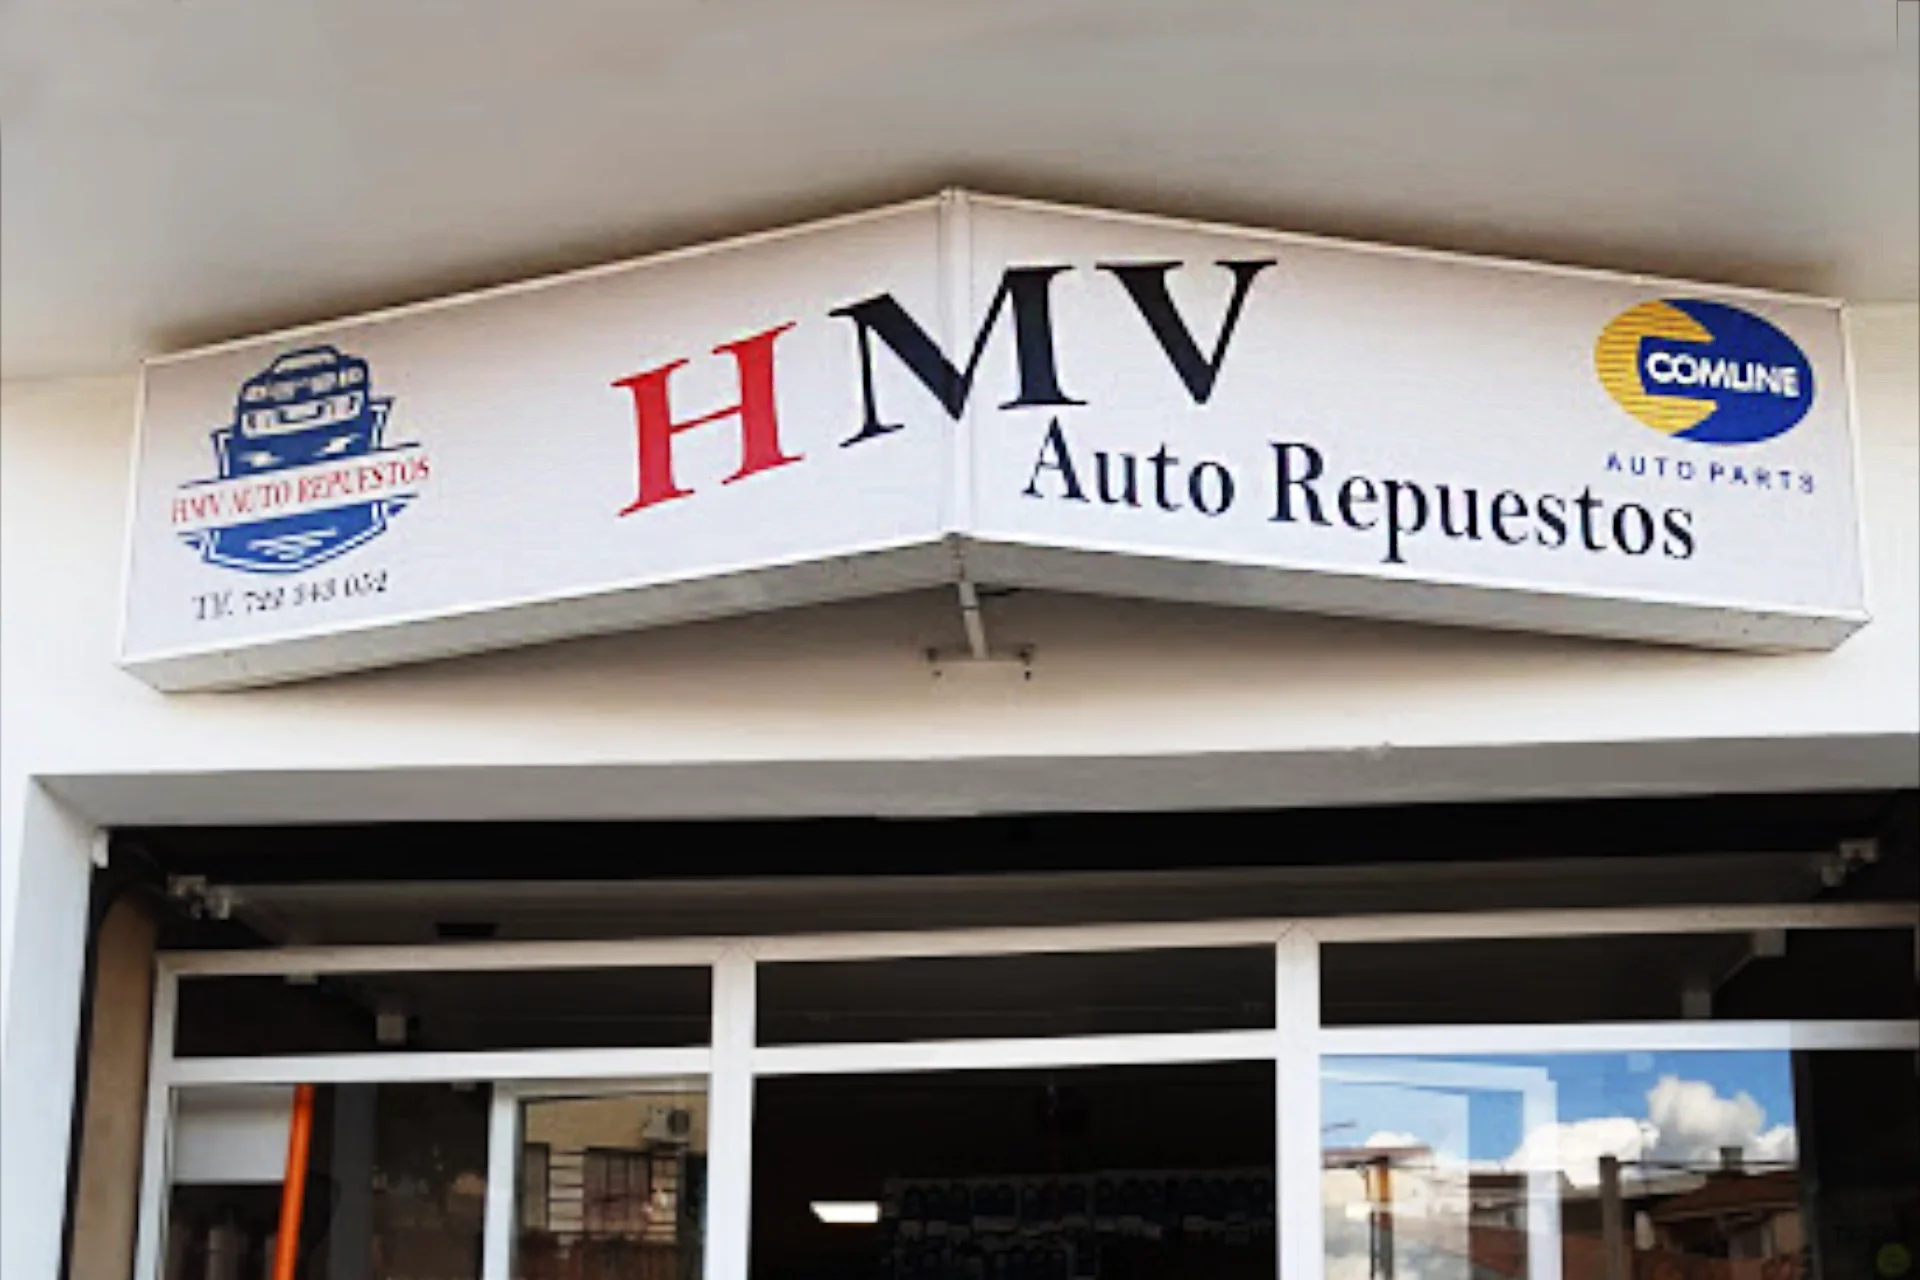 HMV Auto Repuestos